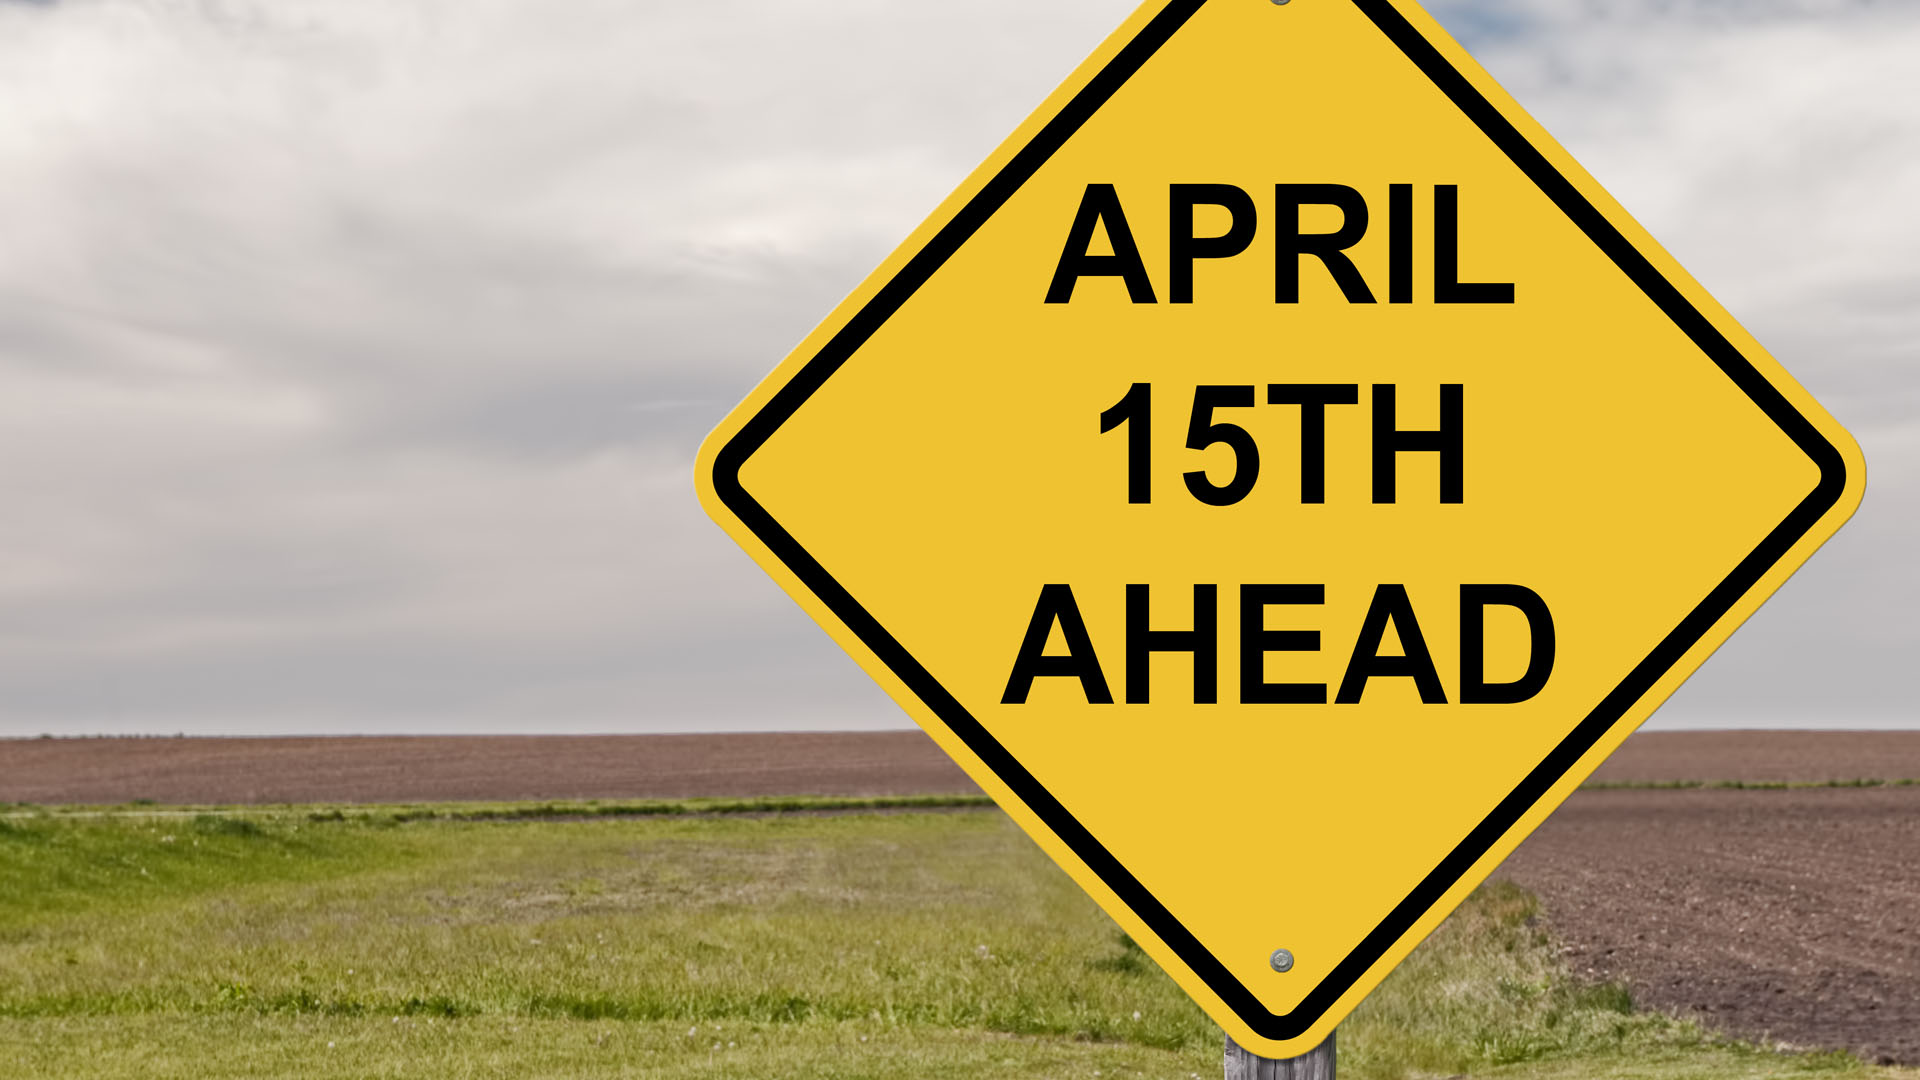 Caution - April 15Th Ahead